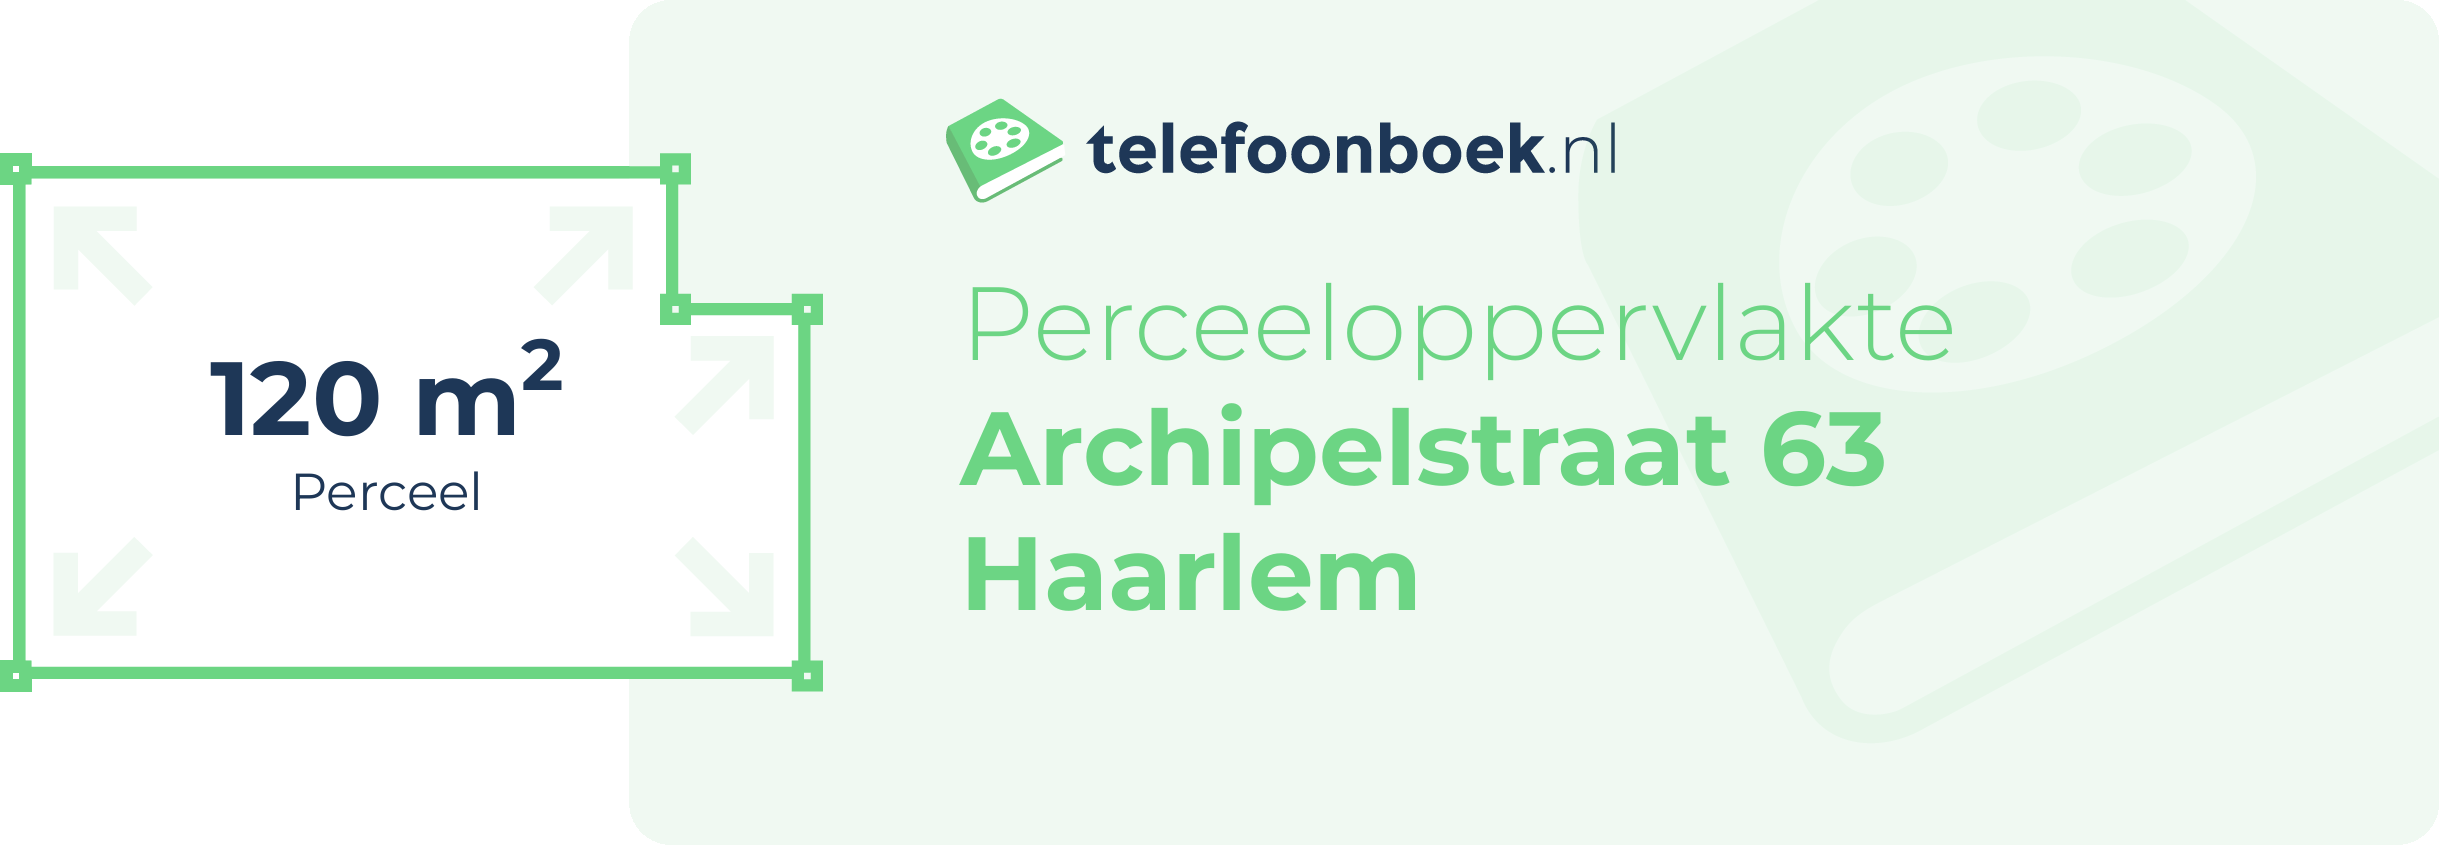 Perceeloppervlakte Archipelstraat 63 Haarlem